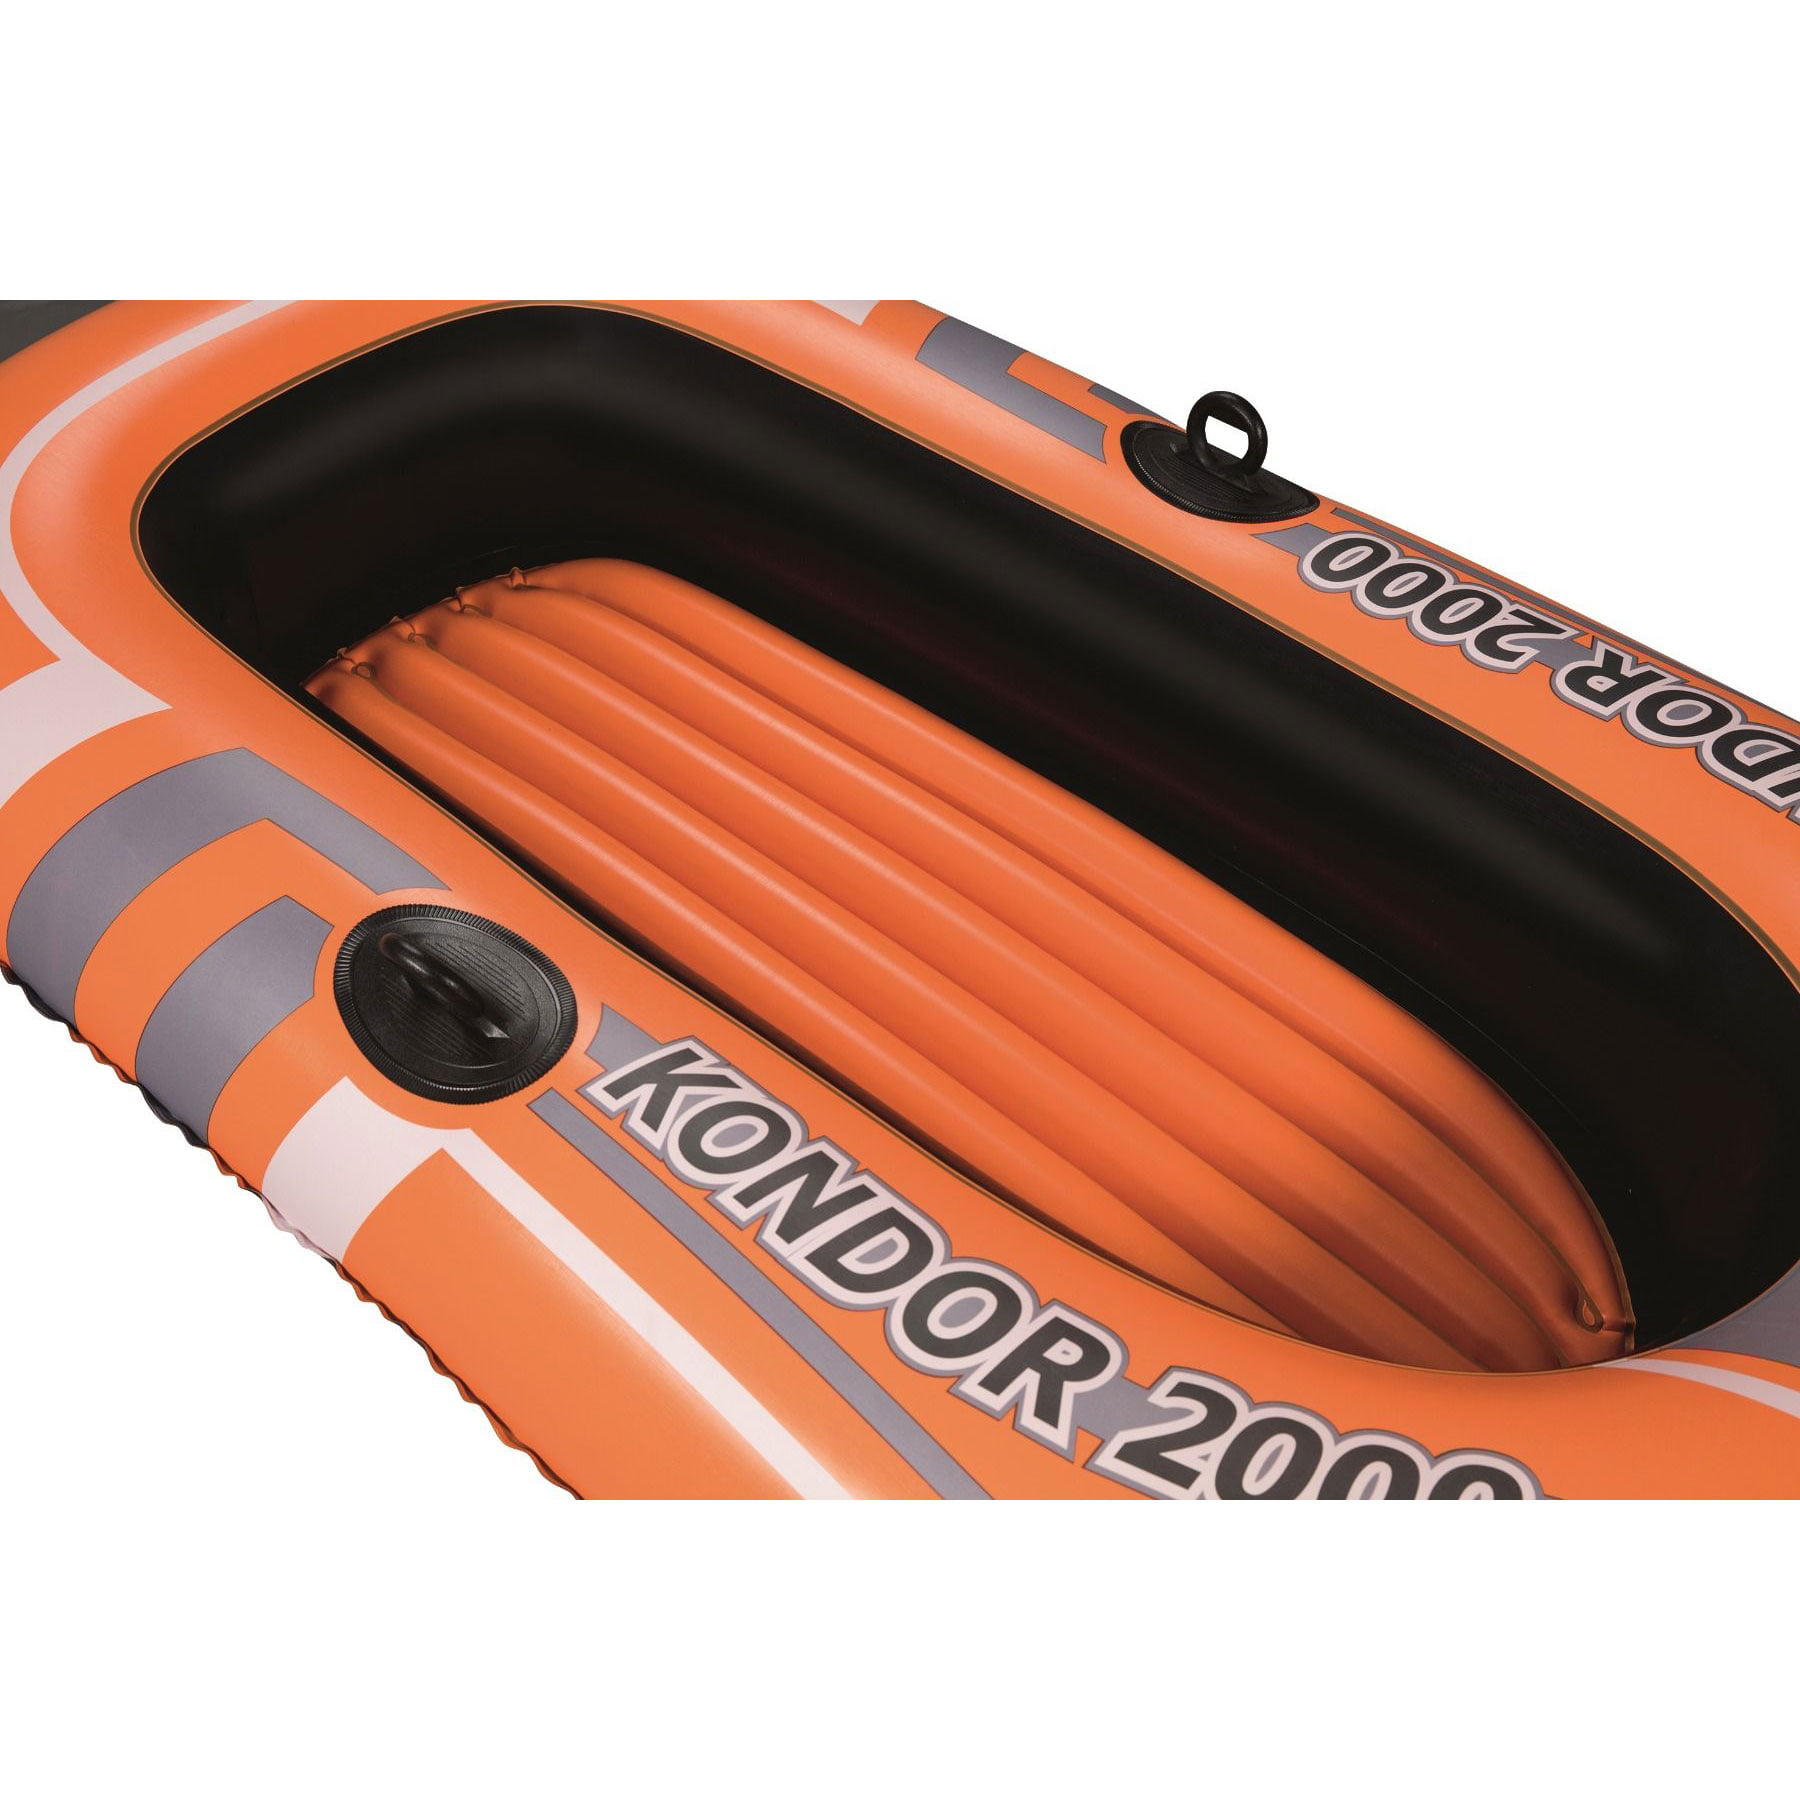 Bateau gonflable Raft Kondor 2000 - Bestway